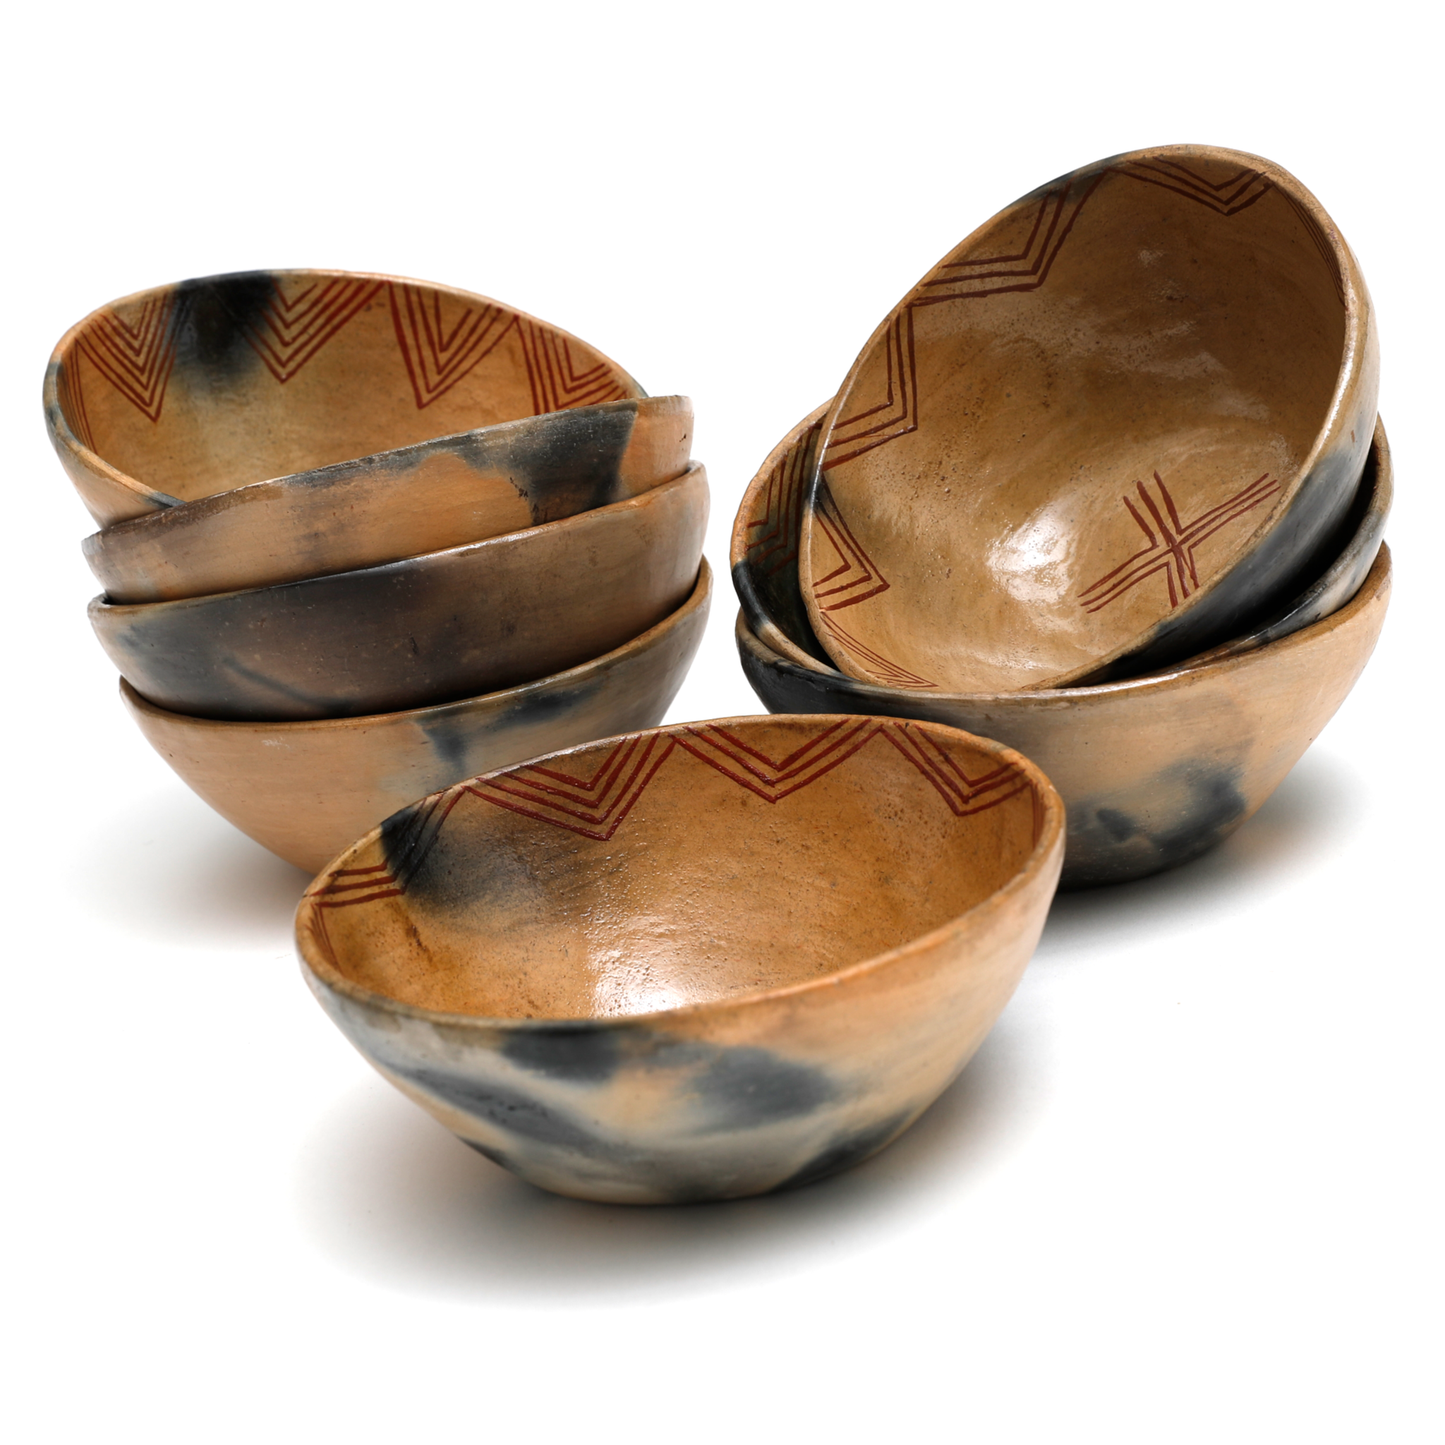 Intiearth-Awajun-Amazon-jungle-pottery-bowls.png